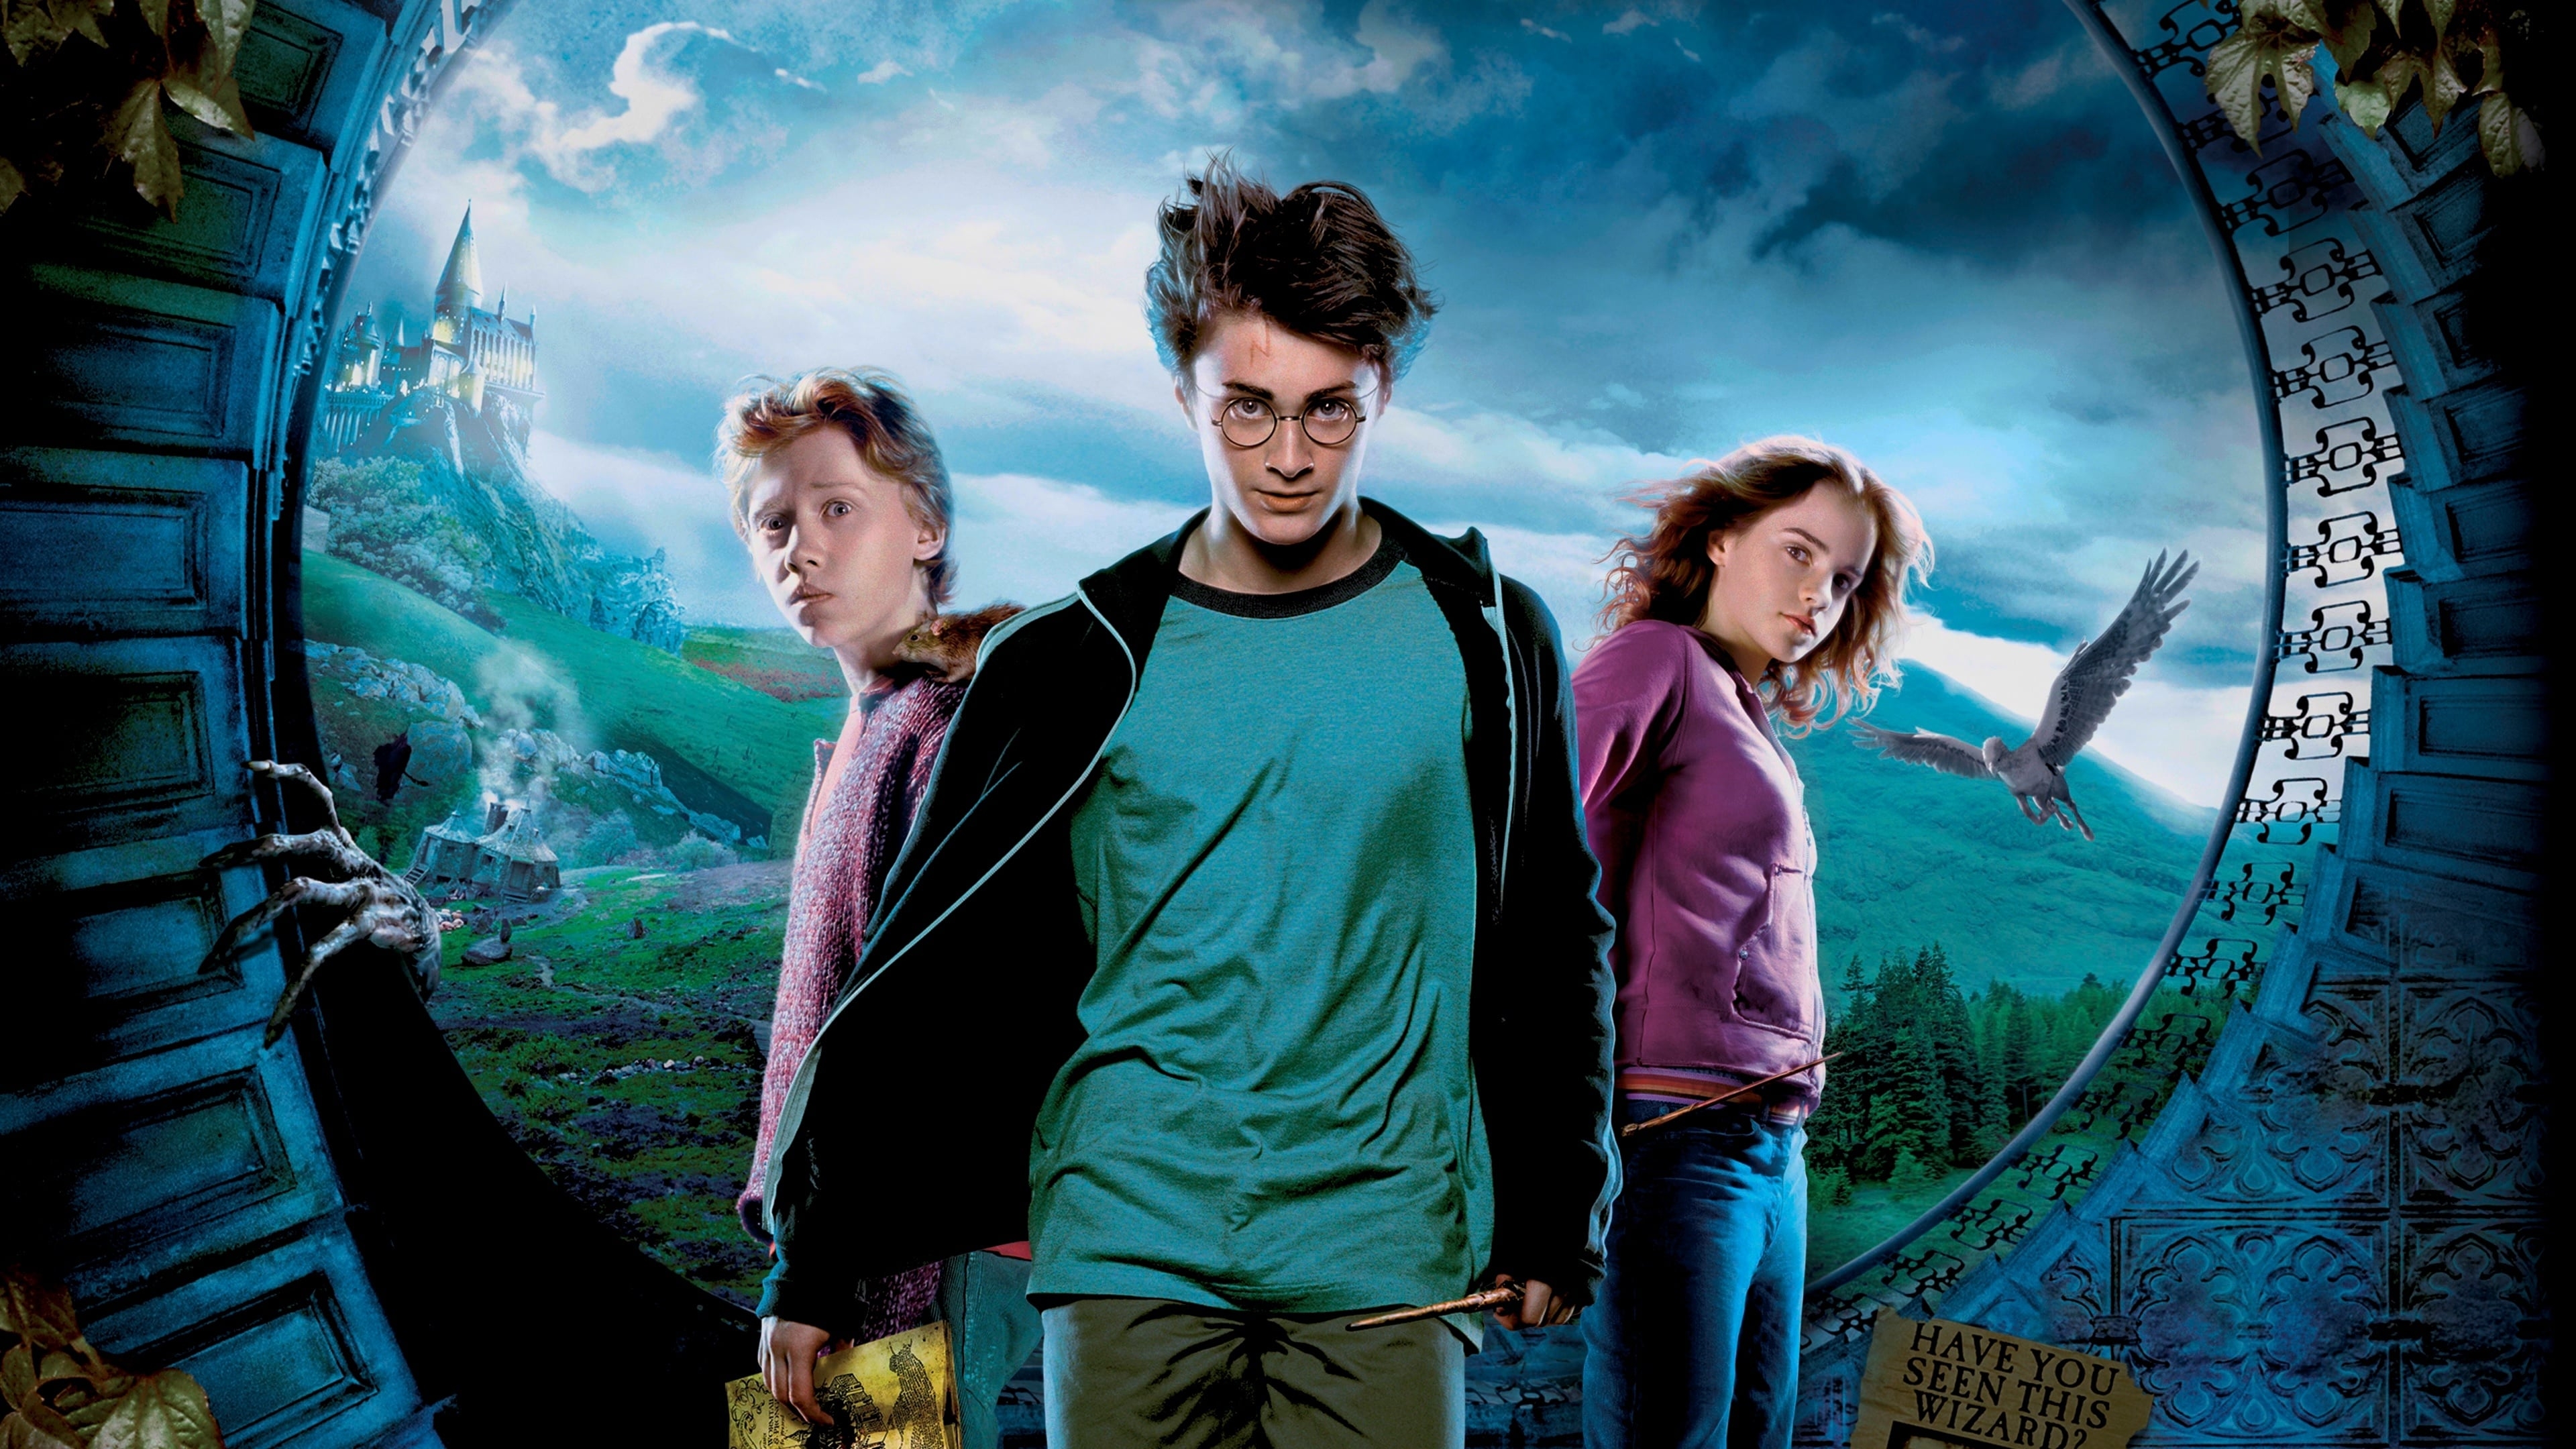 HD wallpaper, Harry Potter And The Prisoner Of Azkaban, Daniel Radcliffe As Harry Potter, Ron Weasley, Emma Watson As Hermione Granger